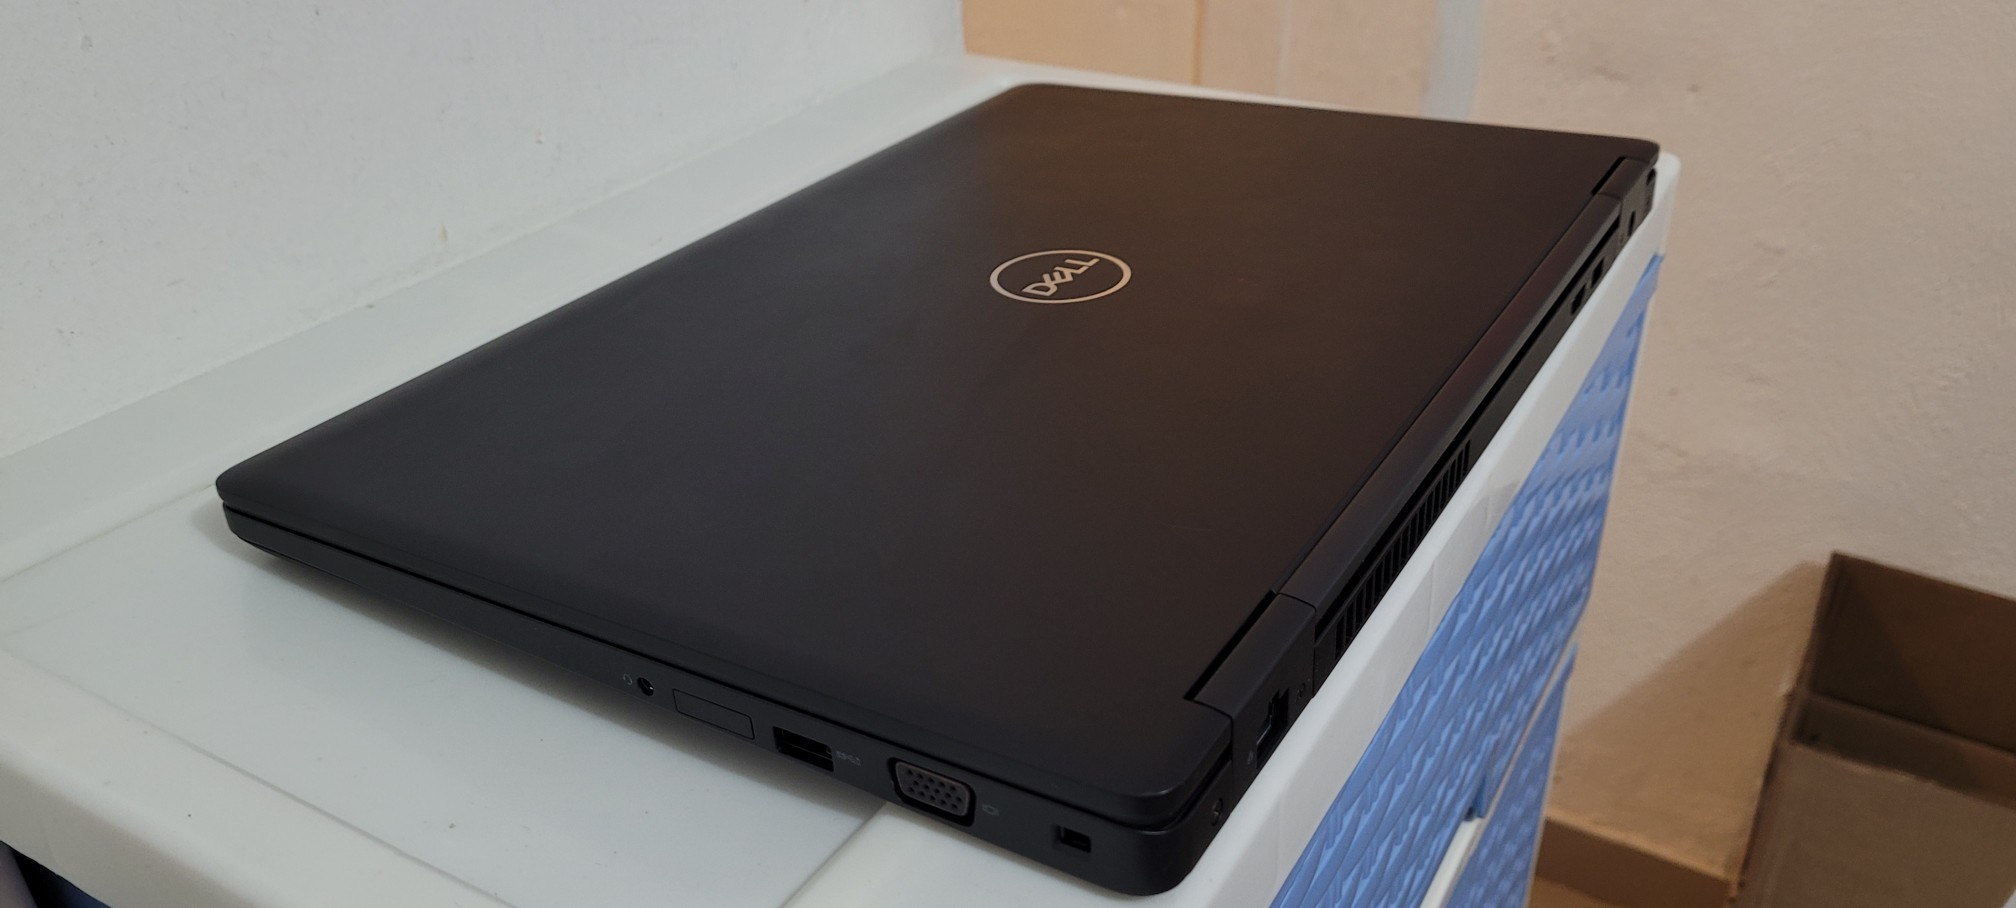 computadoras y laptops - Dell 5591 17 Pulg Core i7 8va Gen Ram 16gb ddr4 Disco 512gb SSD Nvidea 2gb Dedic 2